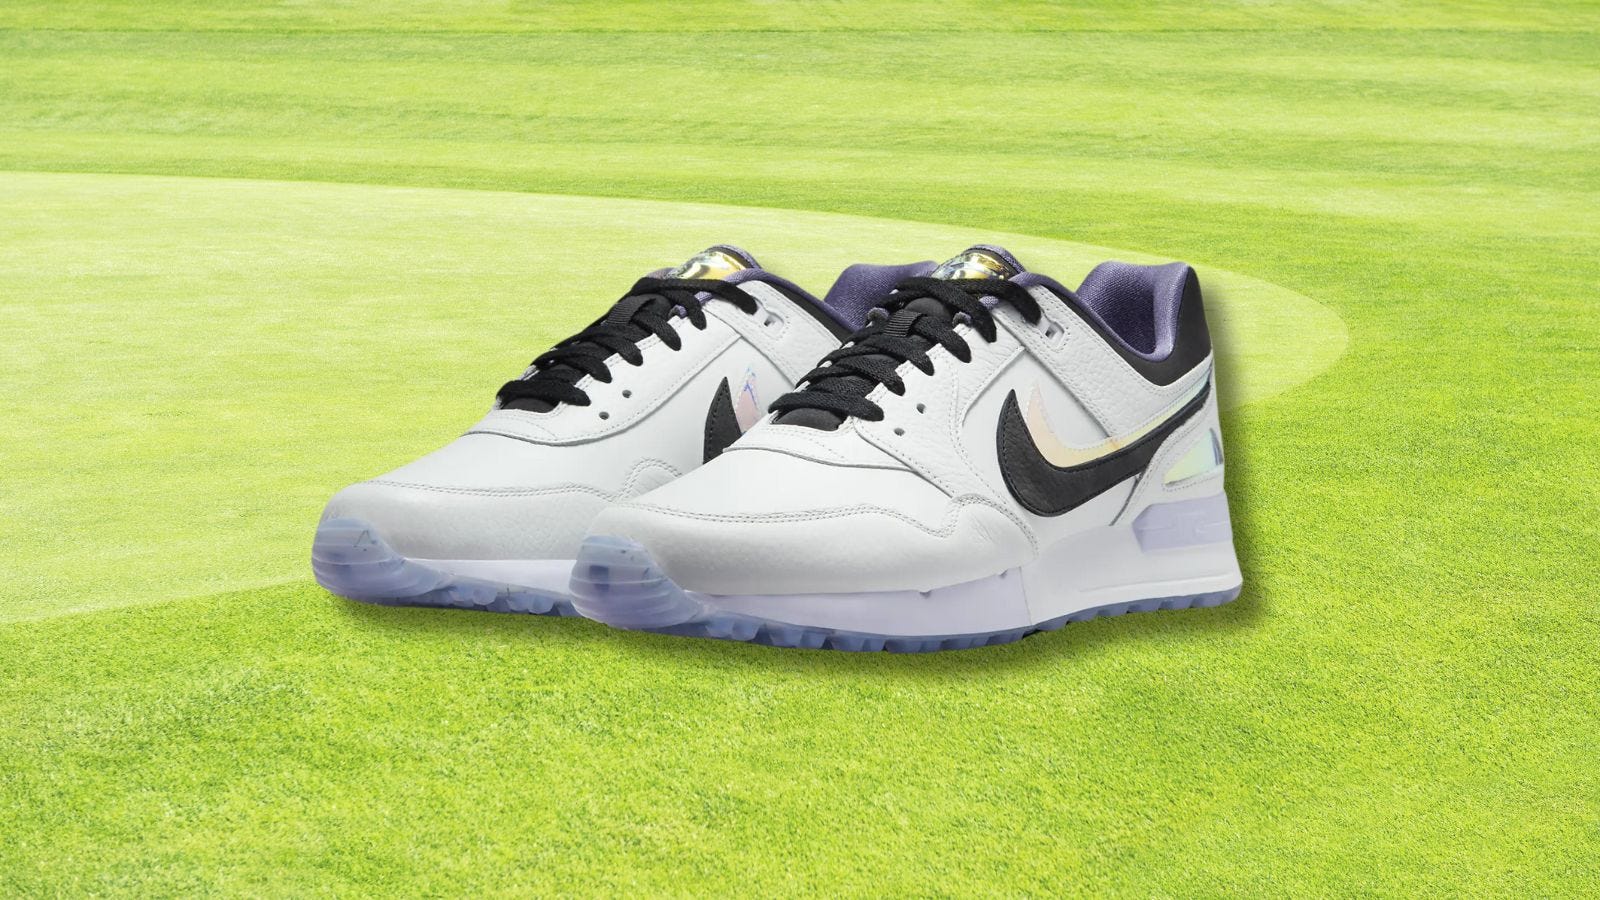 pair of nike air pegasus 89 g nrg golf shoes set against a golf green background